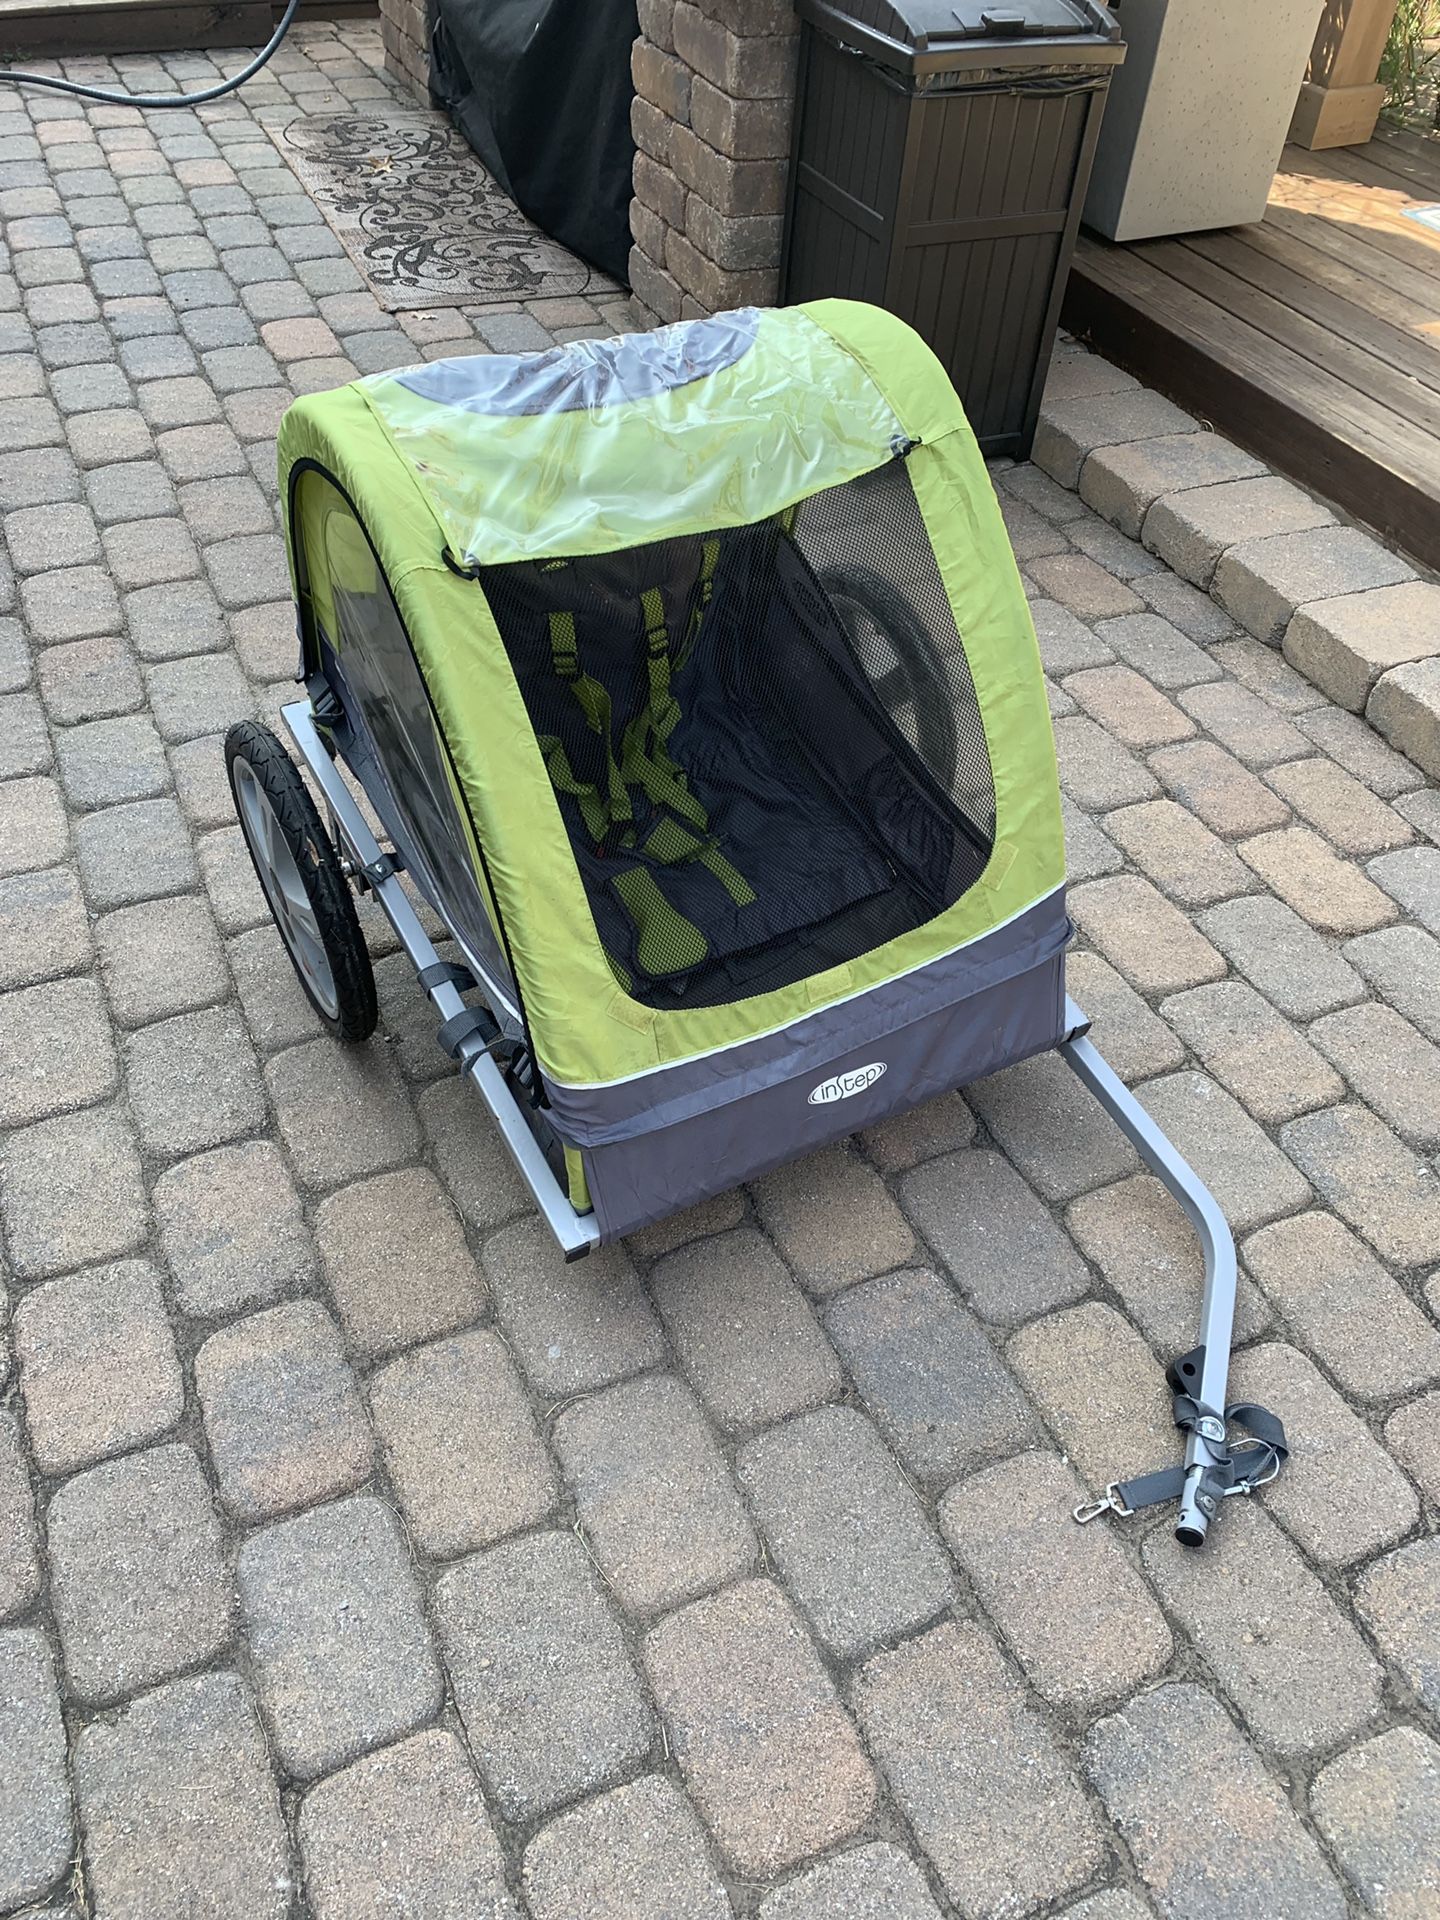 Bike carriage, trailer for children